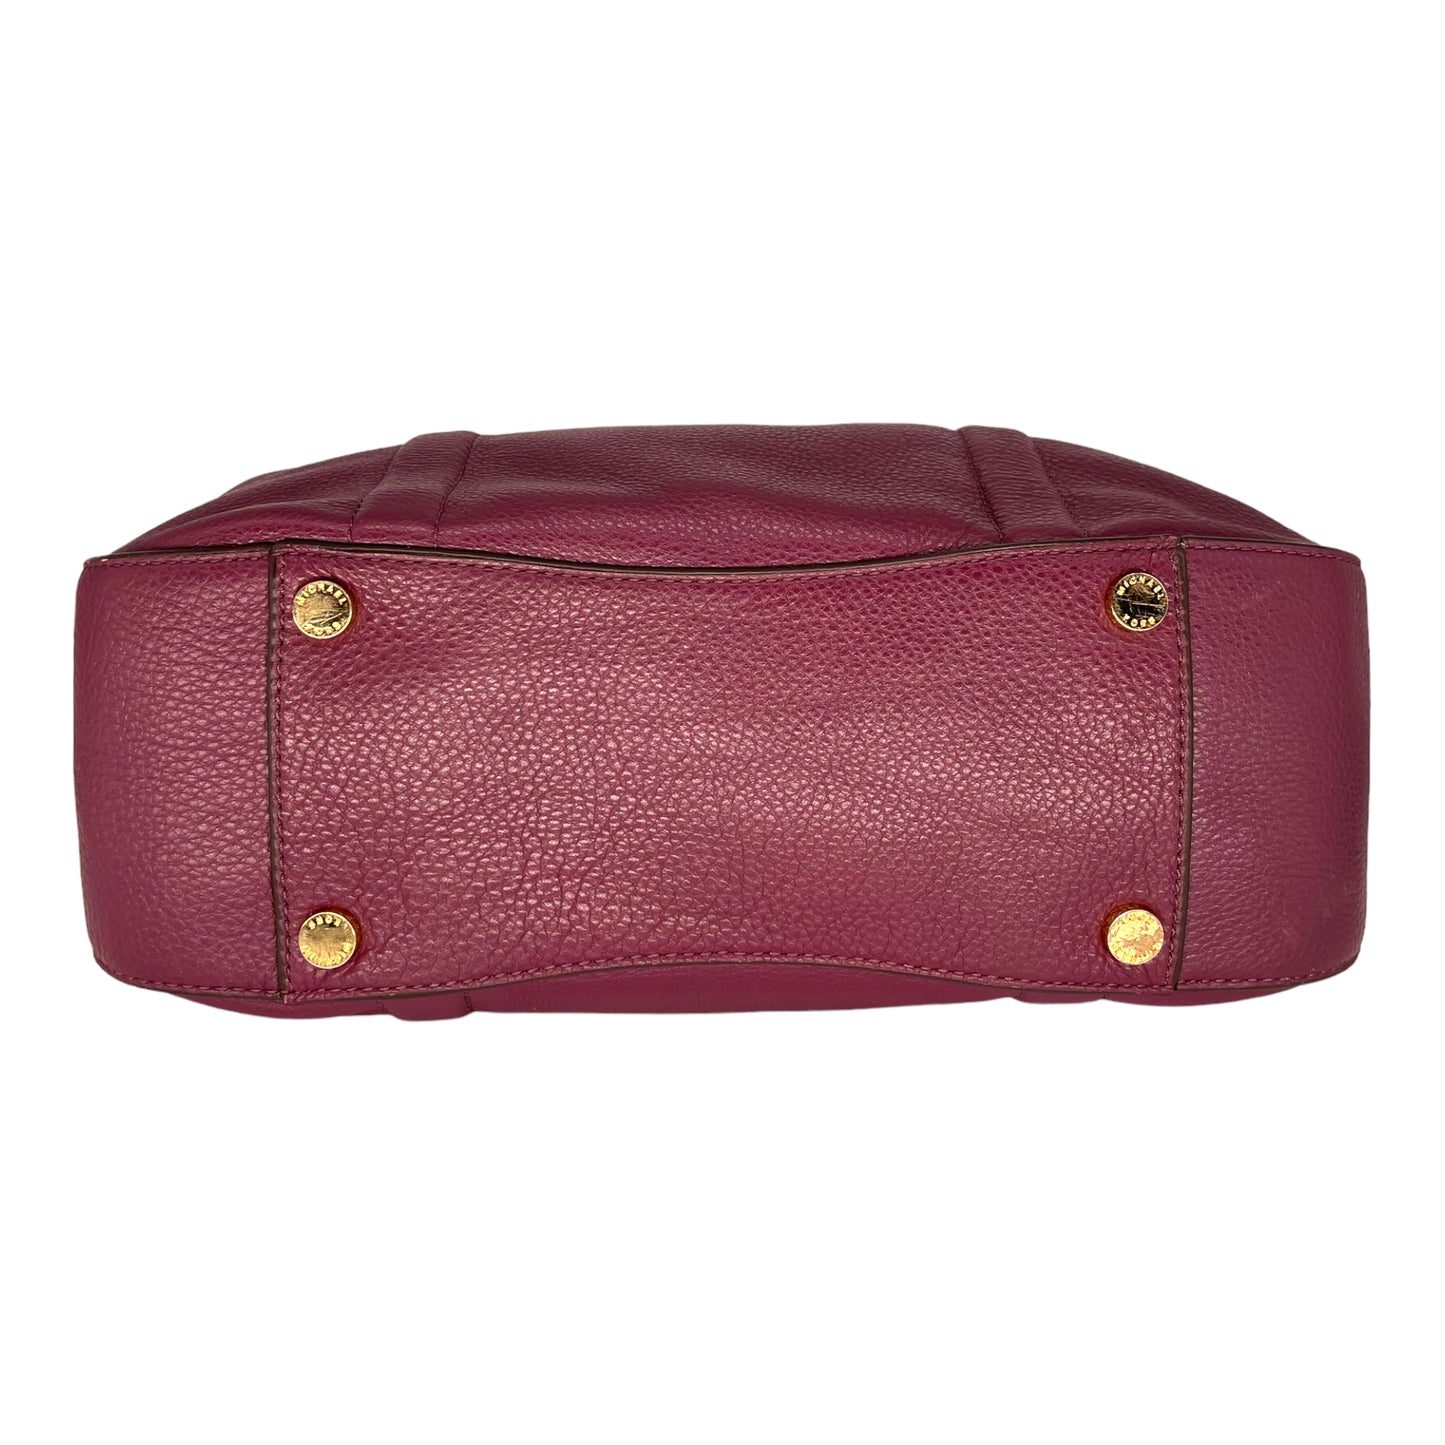 Michael Kors Raven Brick Large Leather Satchel Handbag